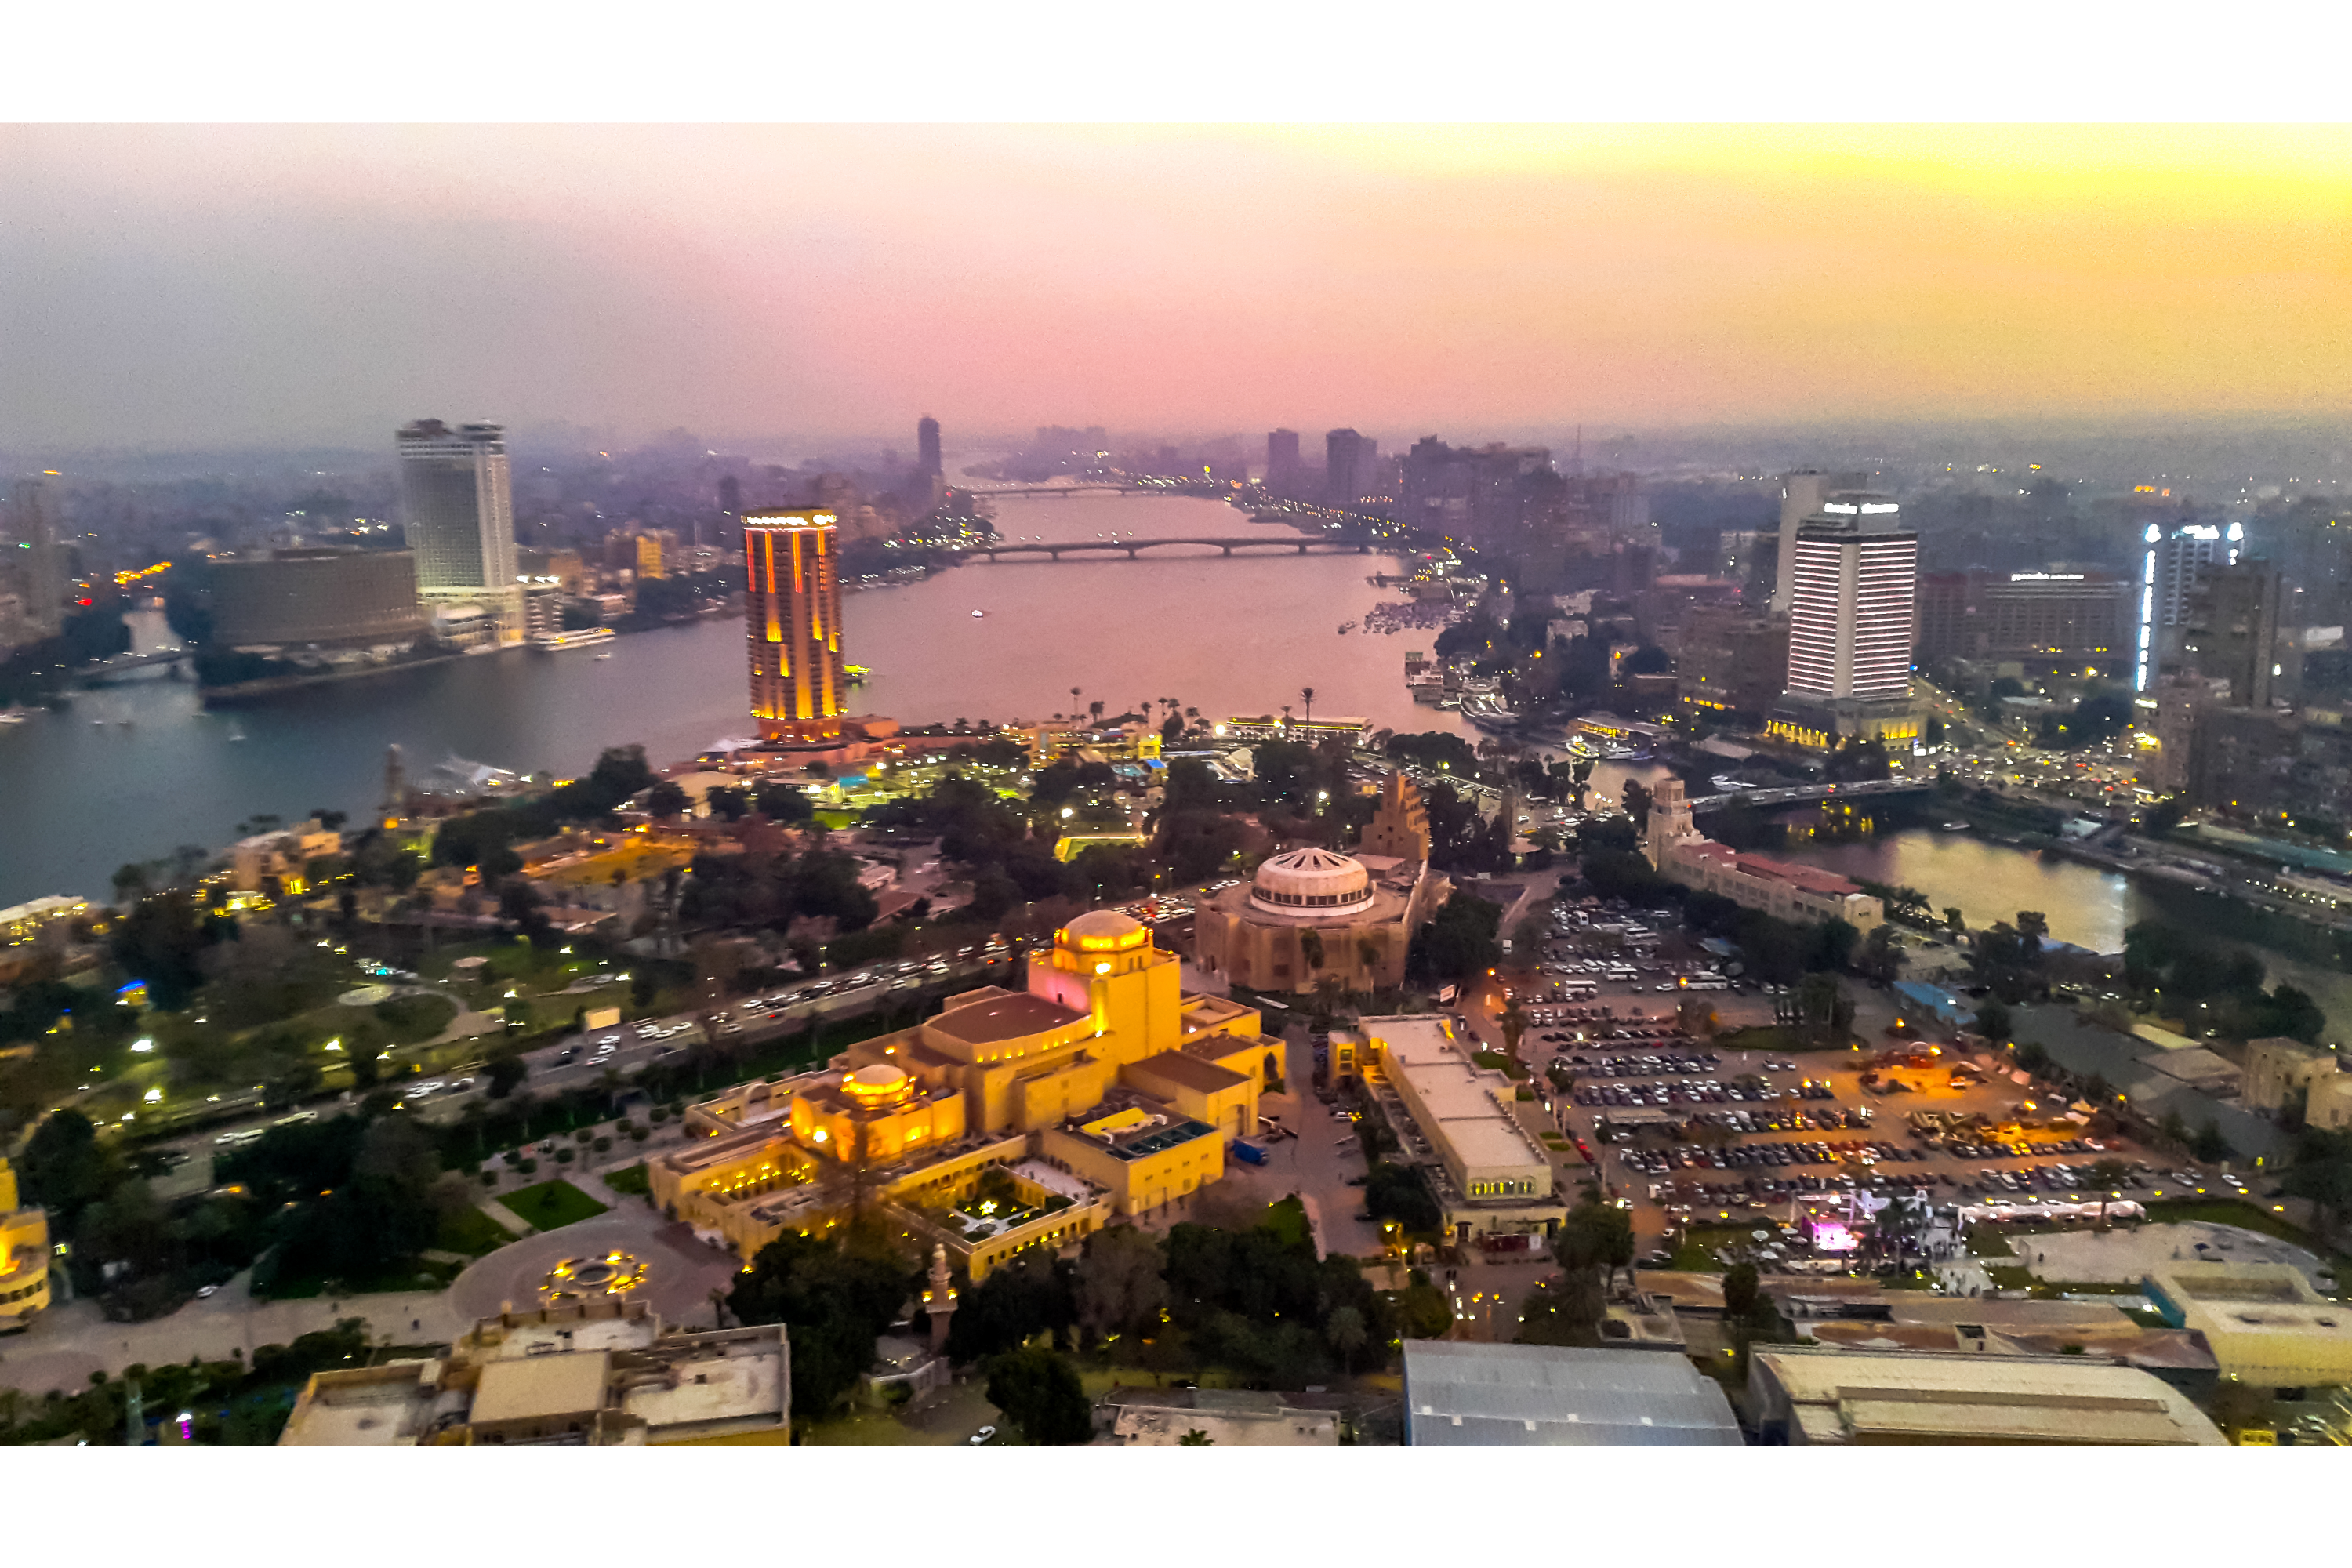 Day 1: Cairo, Egypt